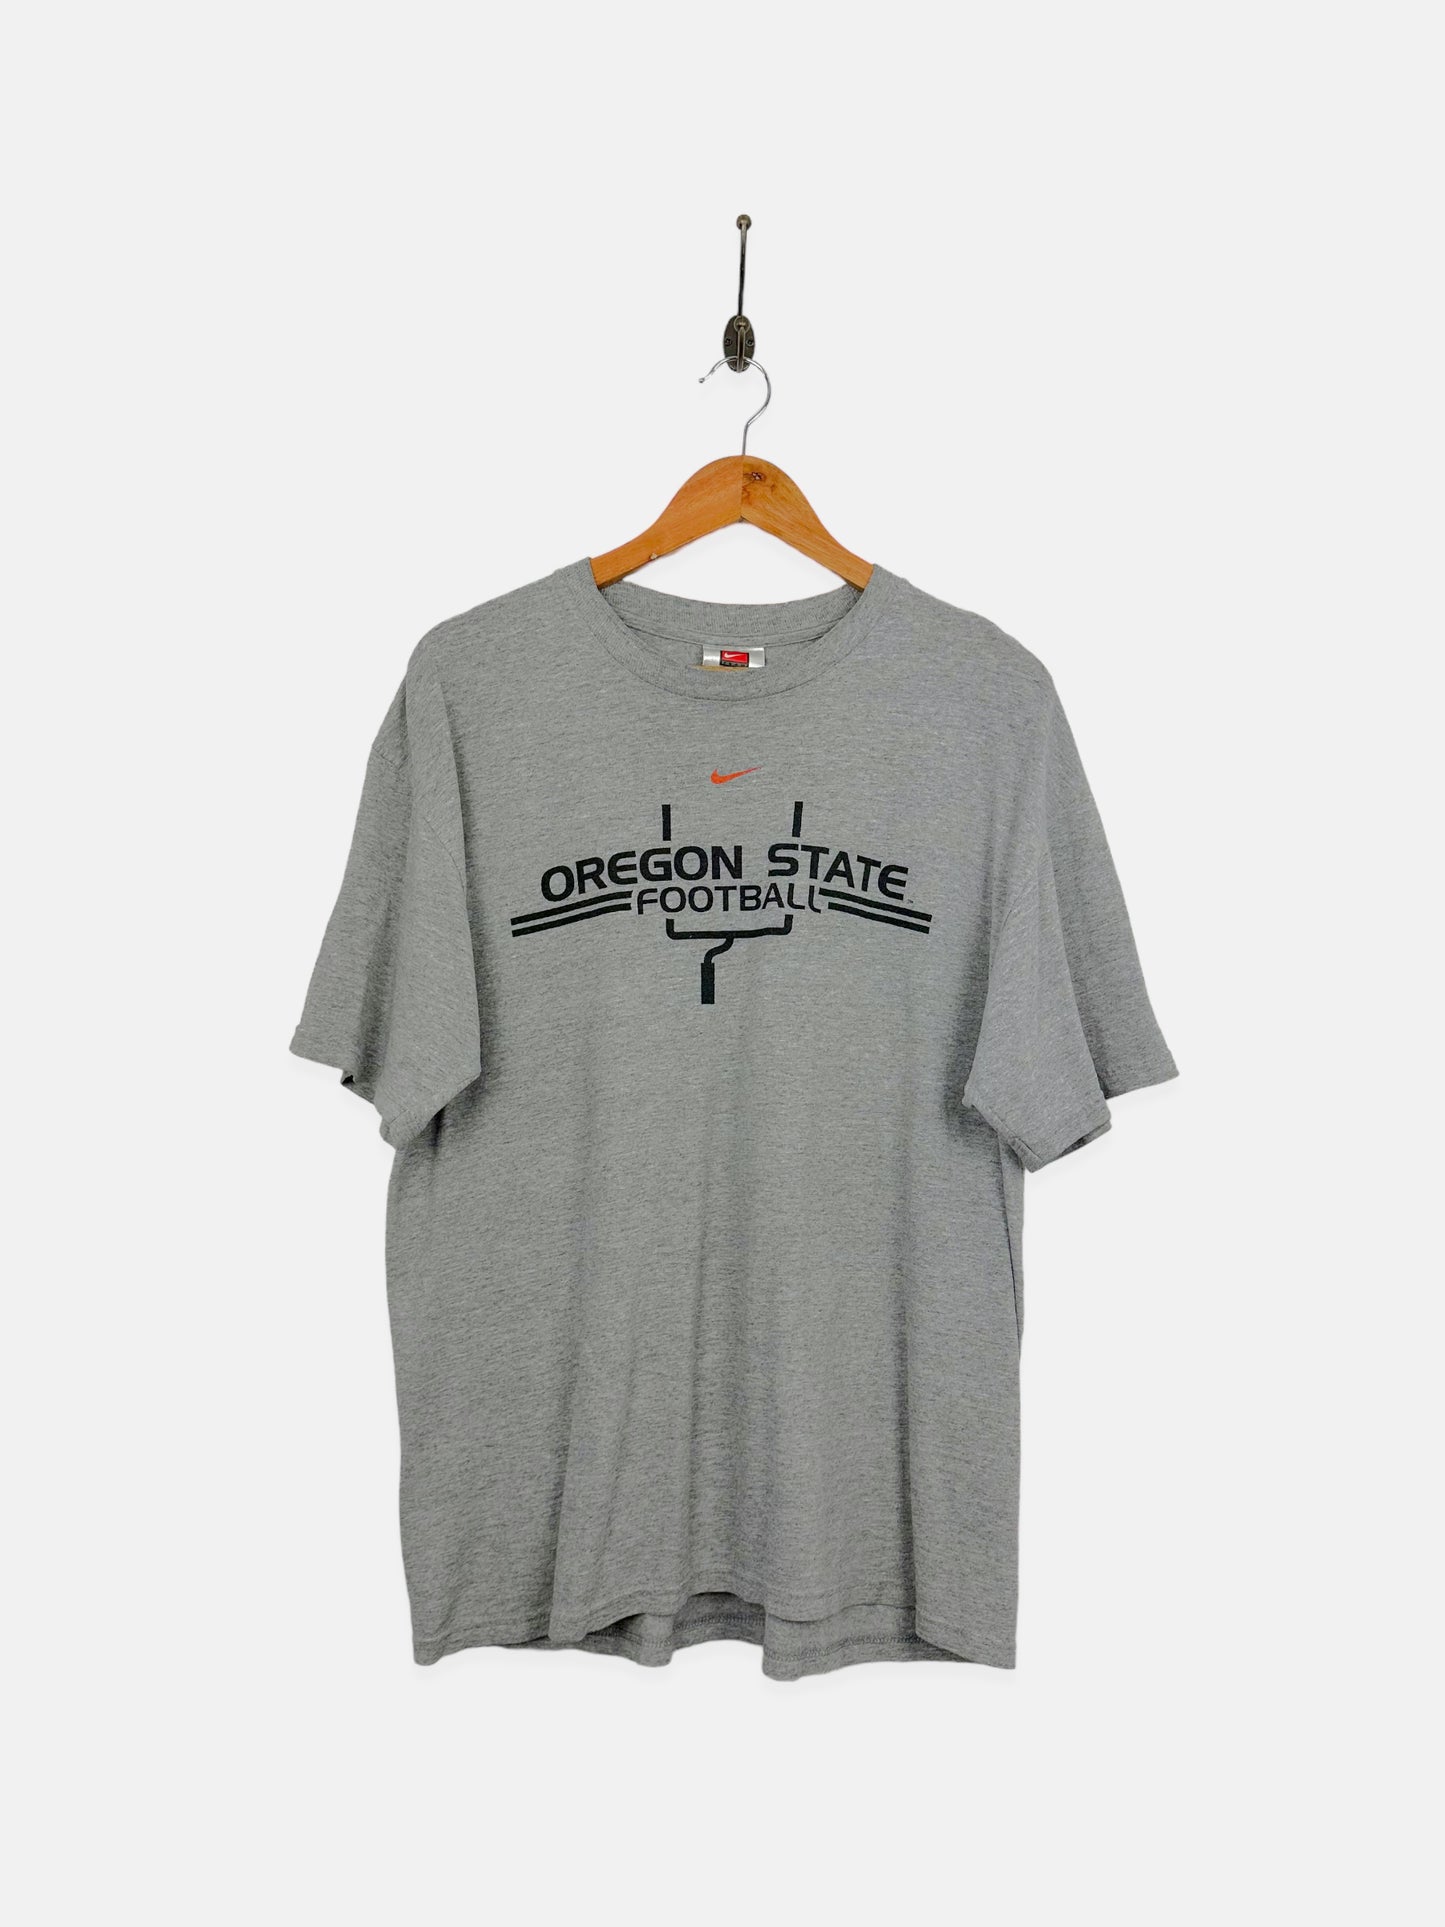 90s Nike Oregon State Football Vintage T-Shirt Size M